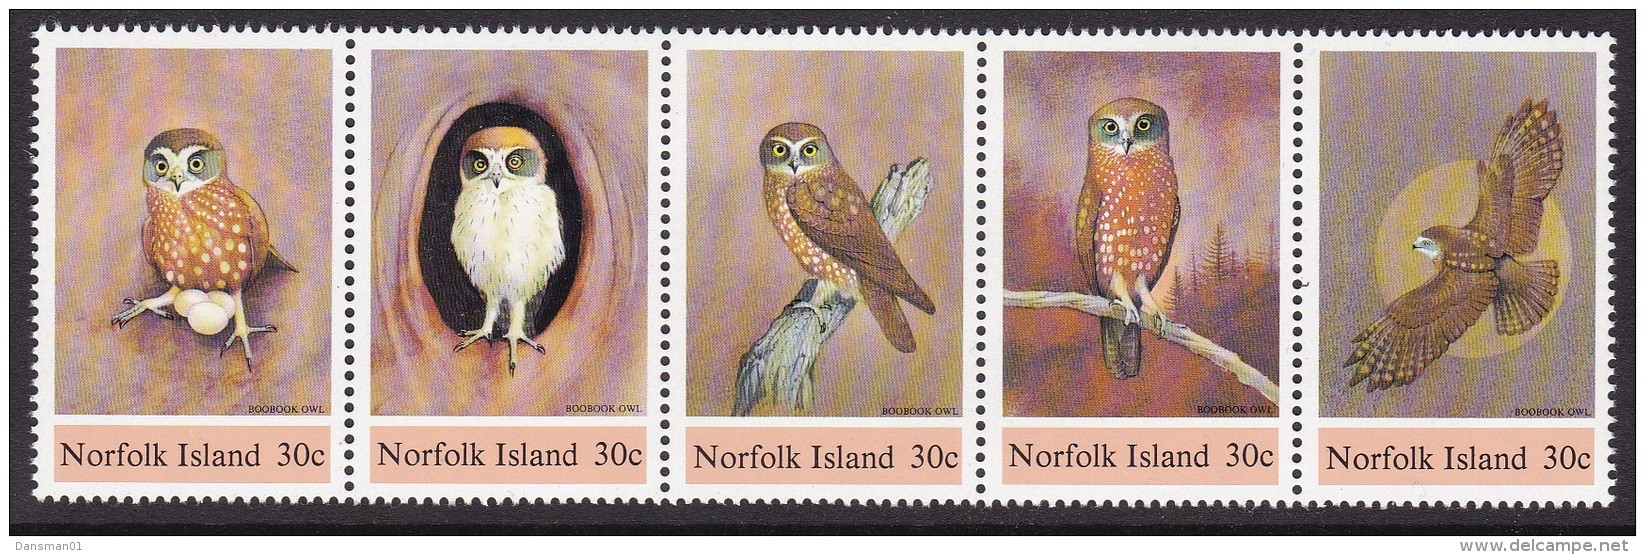 Norfolk Island 1984 Babook Owl Sc 343 Mint Never Hinged - Isla Norfolk